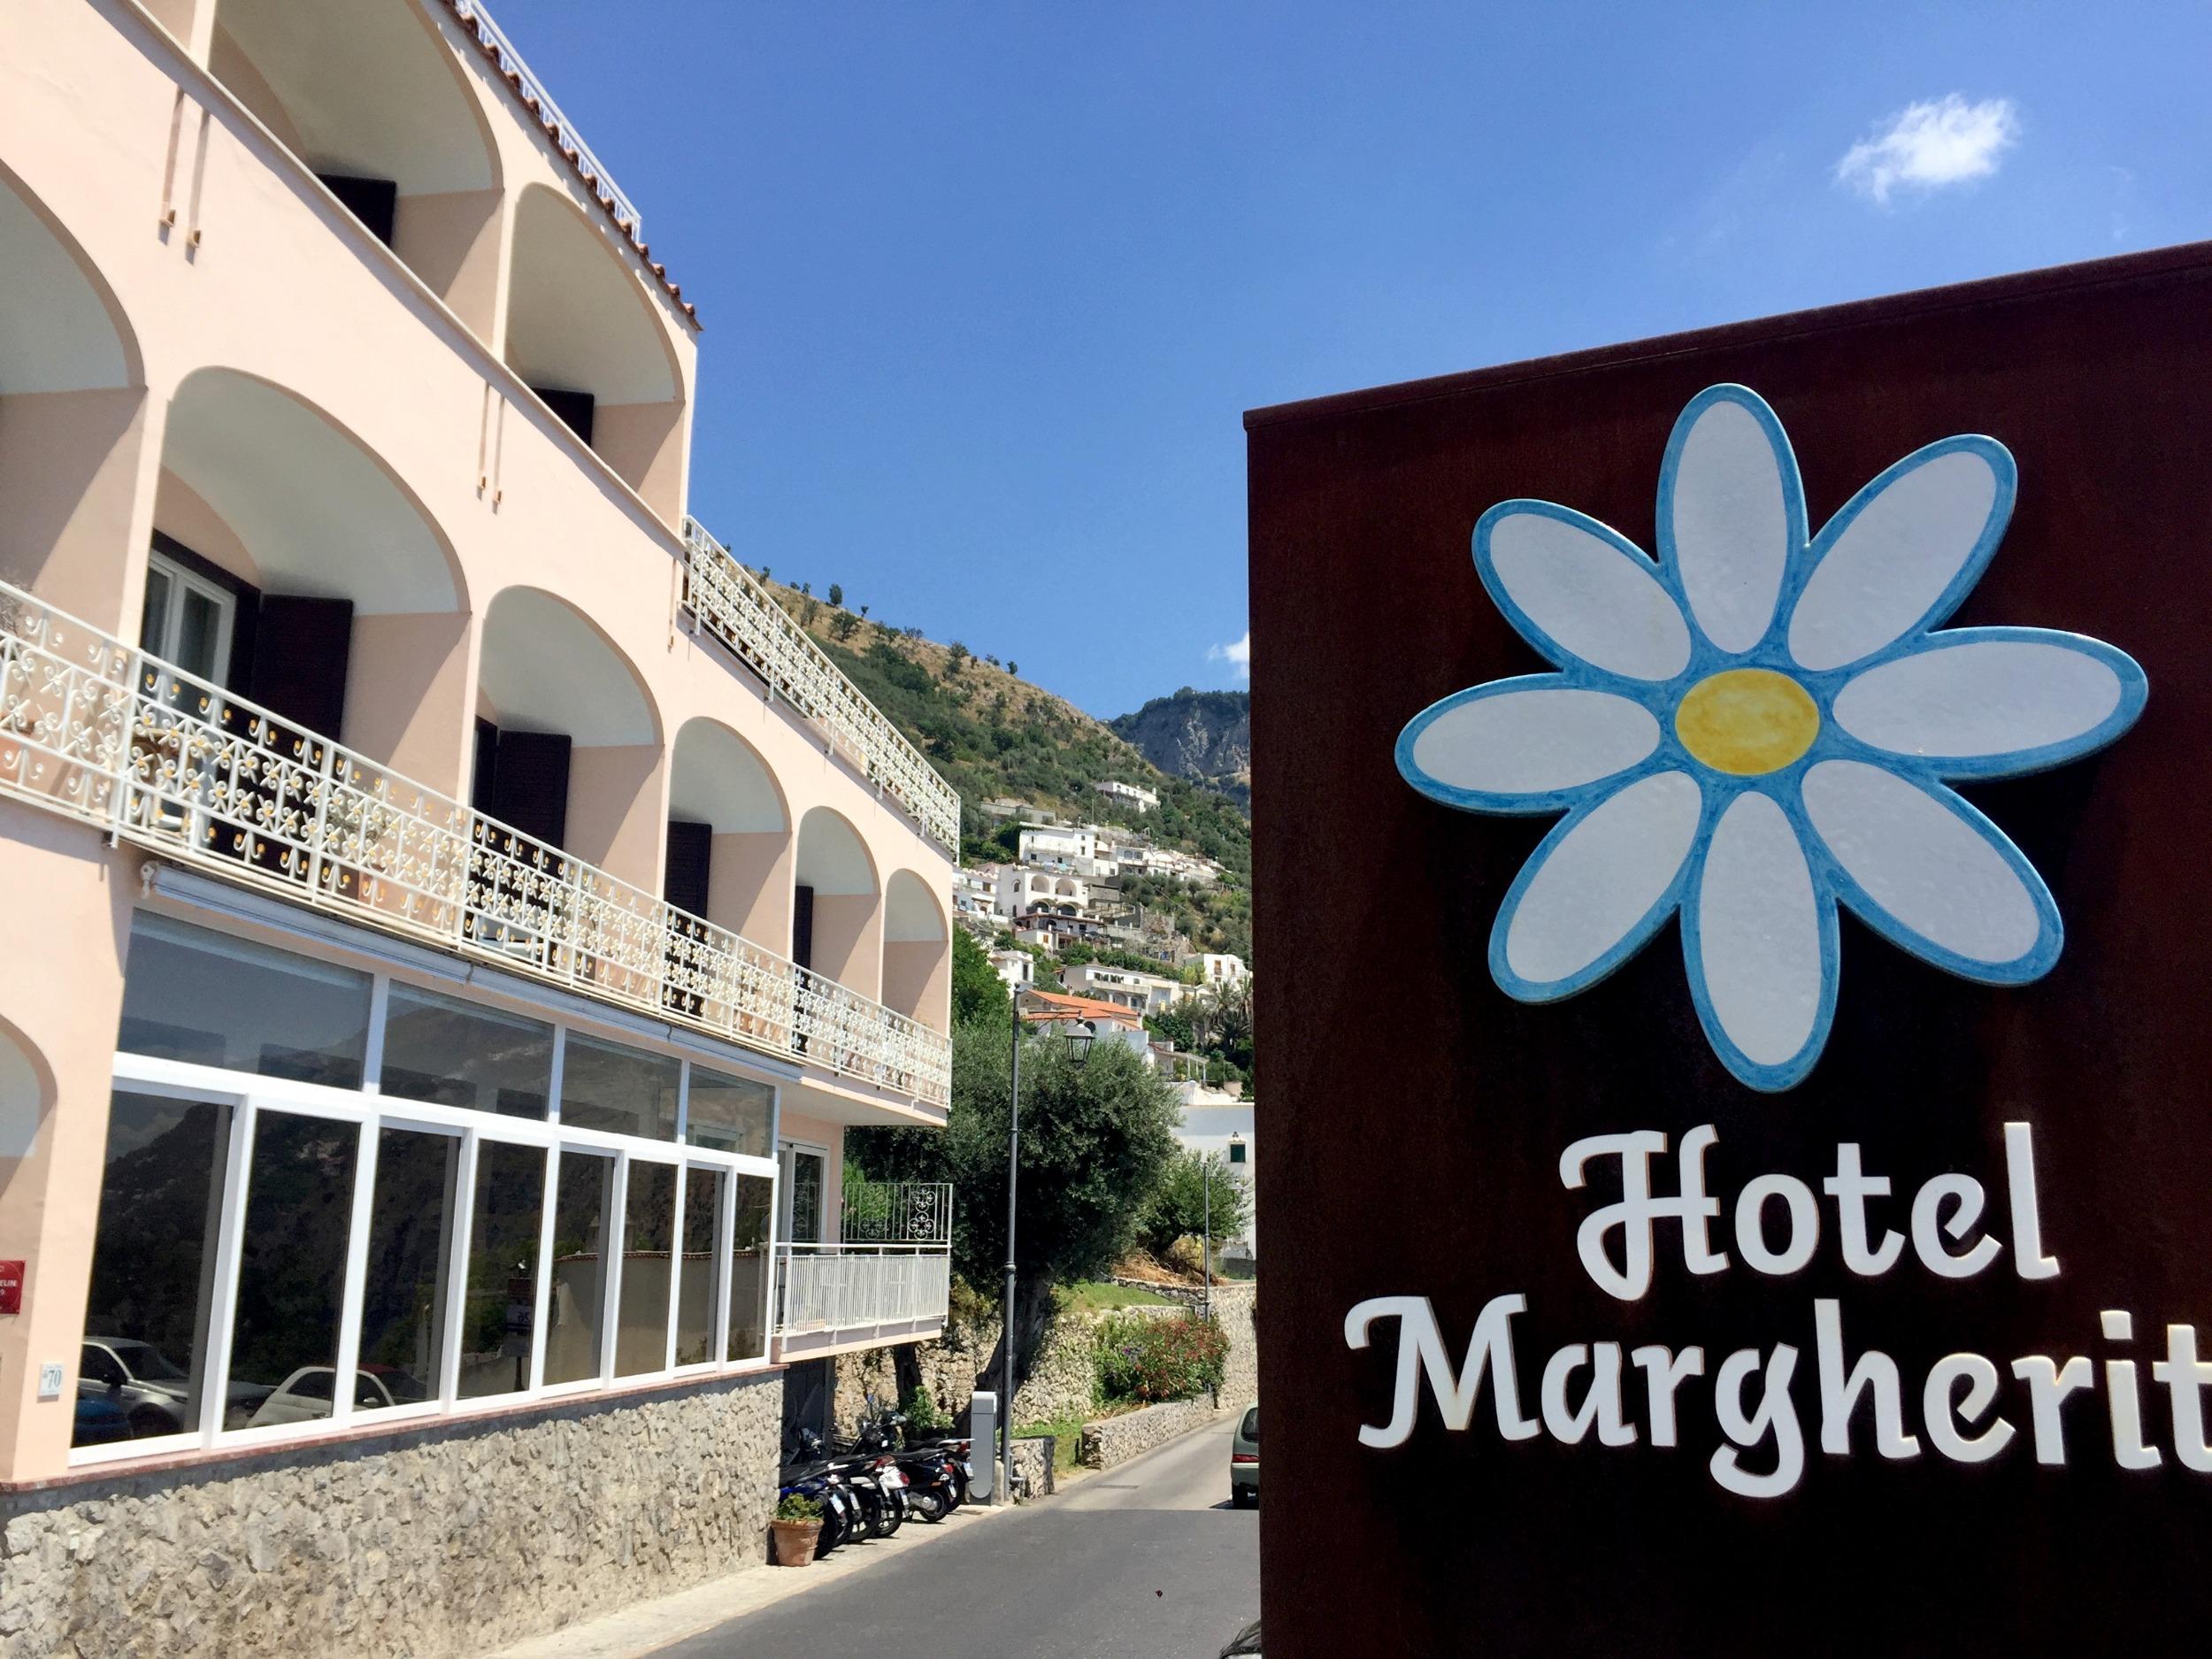 Logis Hotel Margherita Ristorante M'Ama, Hôtel Logis PRAIANO, séjour ...